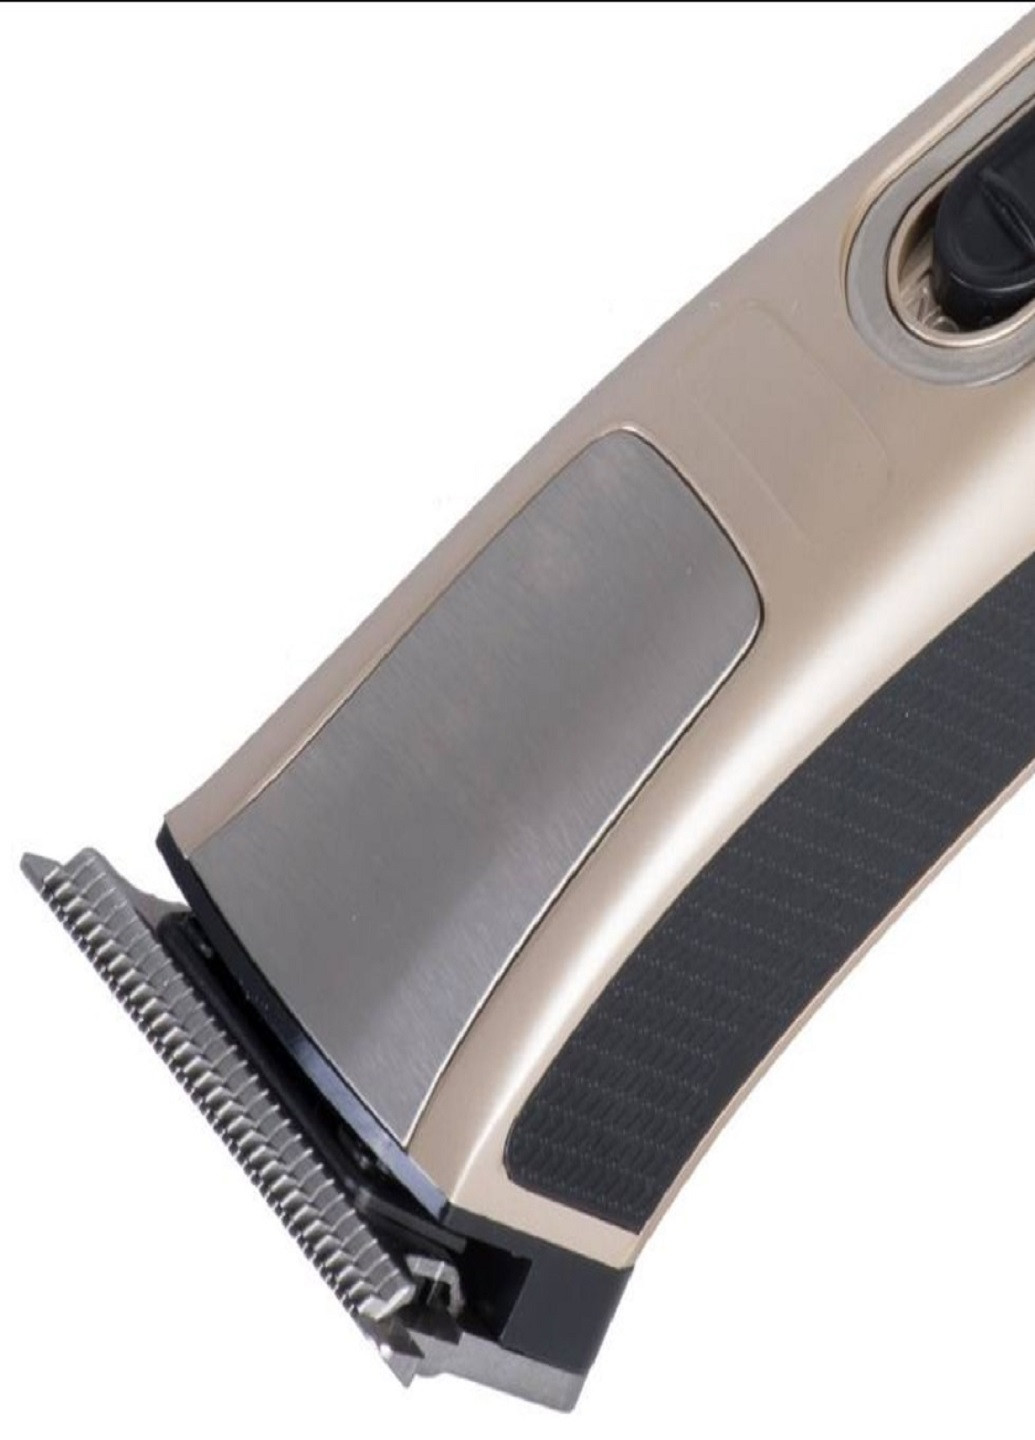 Акумуляторна машинка для стрижки волосся з насадками GM 657 VTech (253257289)